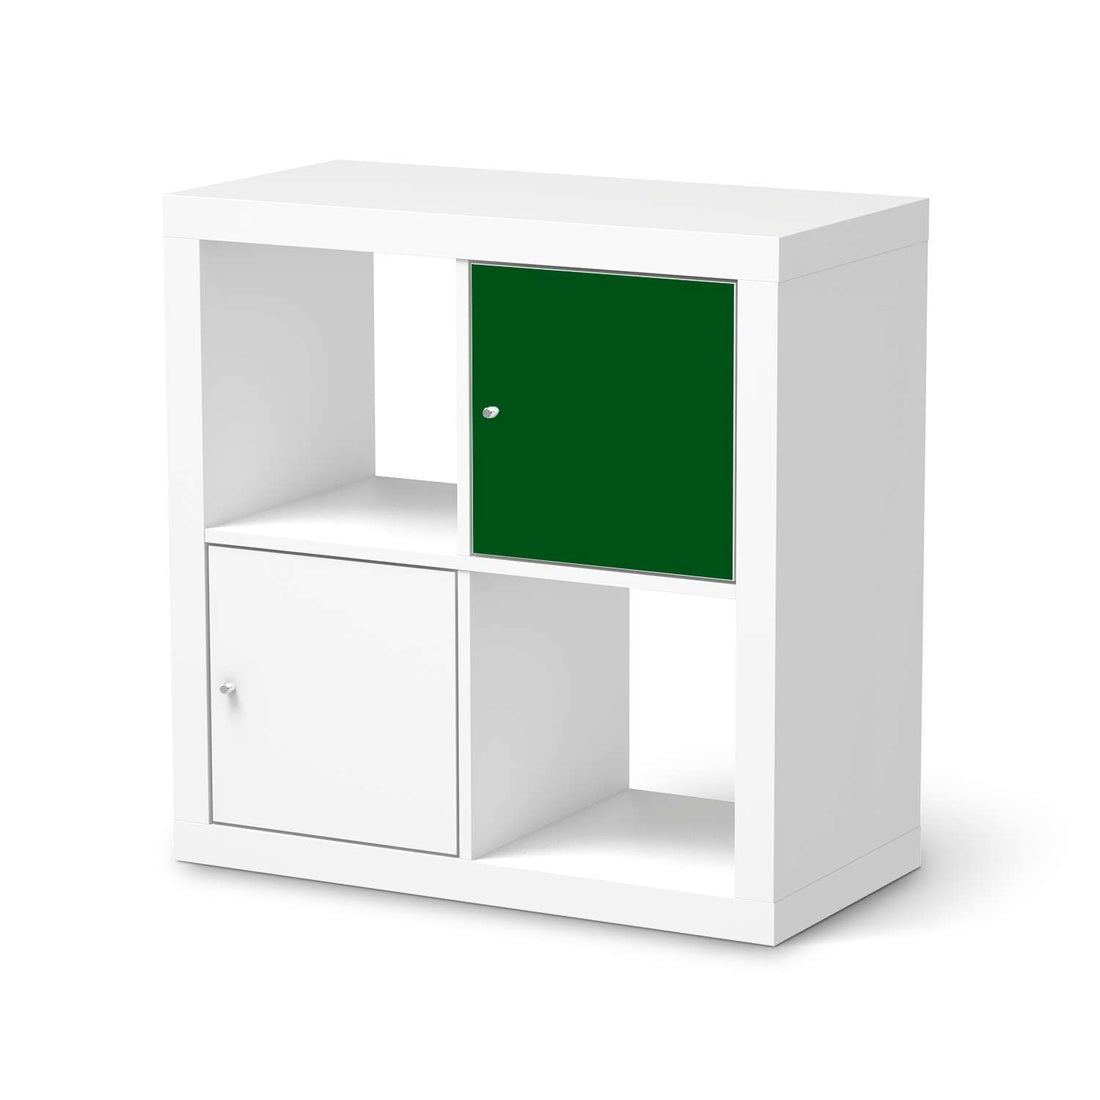 Selbstklebende Folie Grün Dark - IKEA Kallax Regal 1 Türe  - weiss